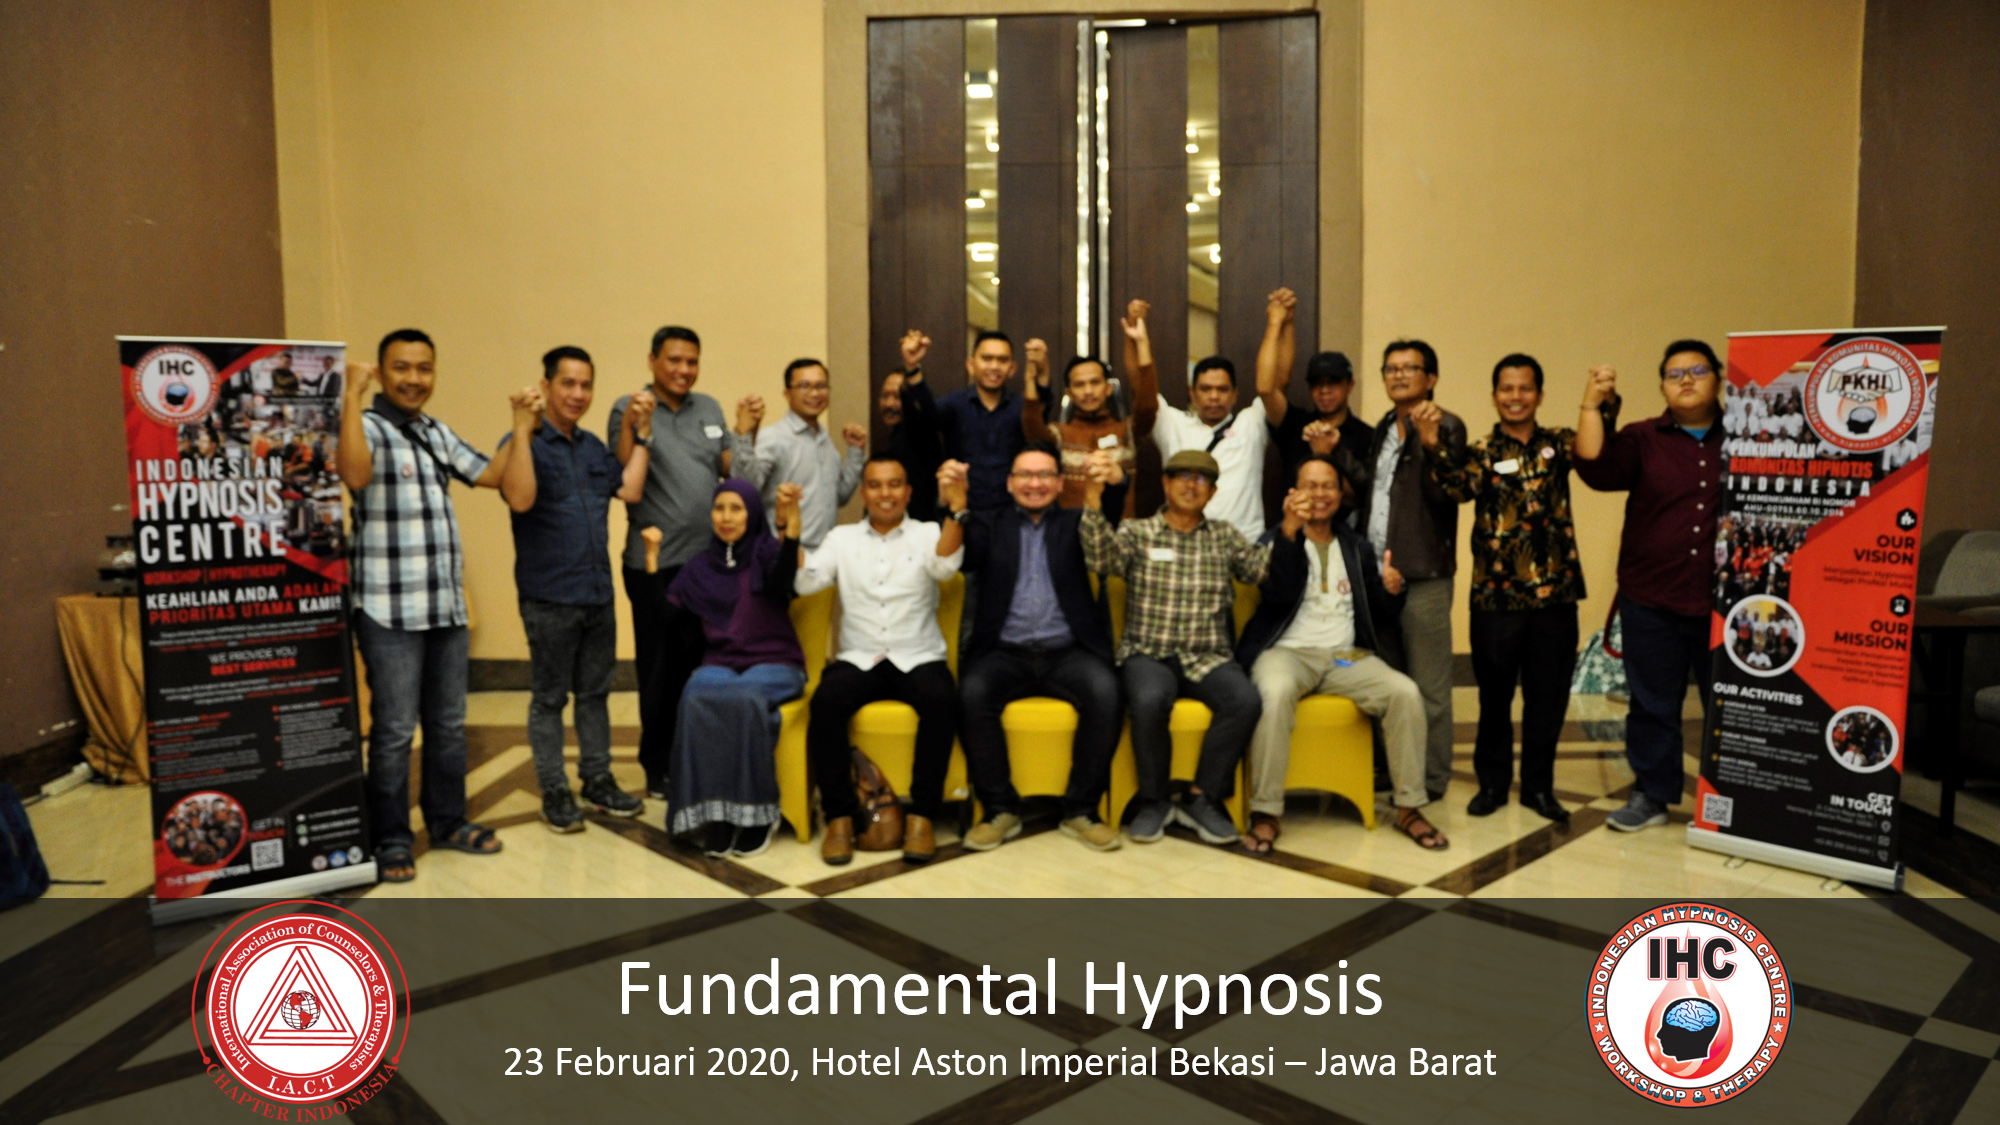 Andri Hakim1 - Fundamental Hypnosis - Februari 23, Bekasi 2020